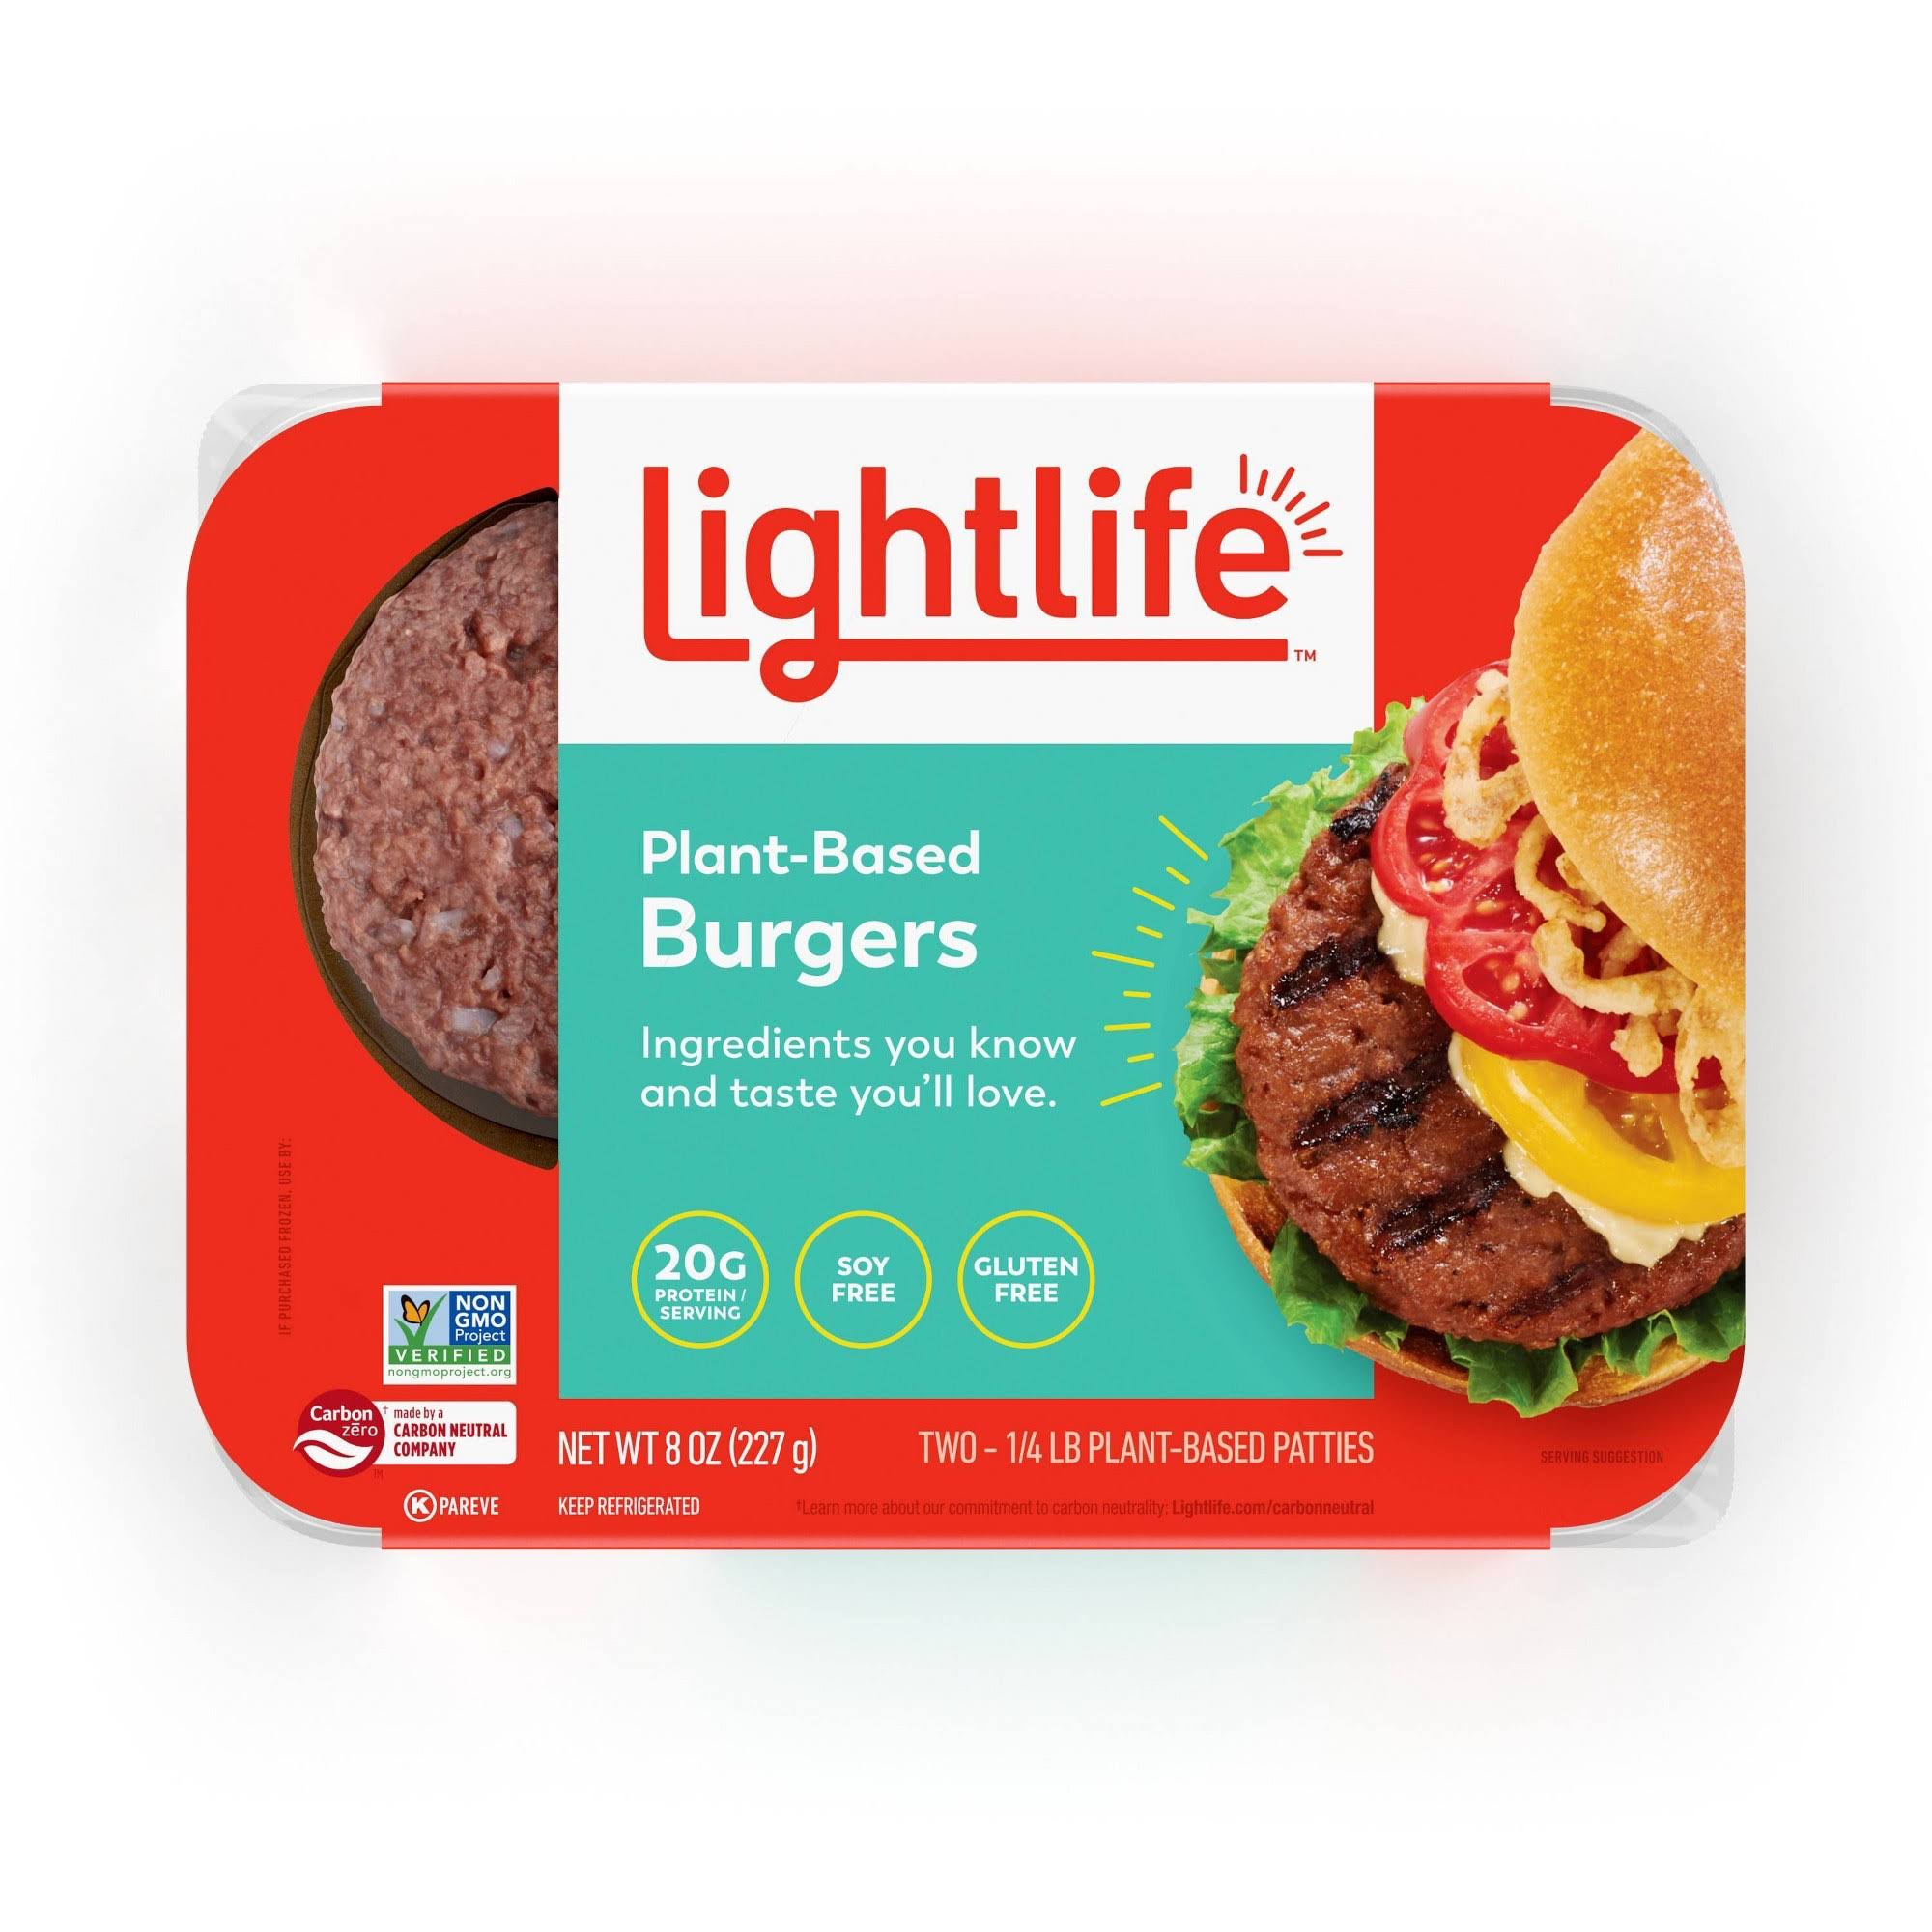 Lightlife Burger, Plant-Based - 2 pack, 0.25 lb patties